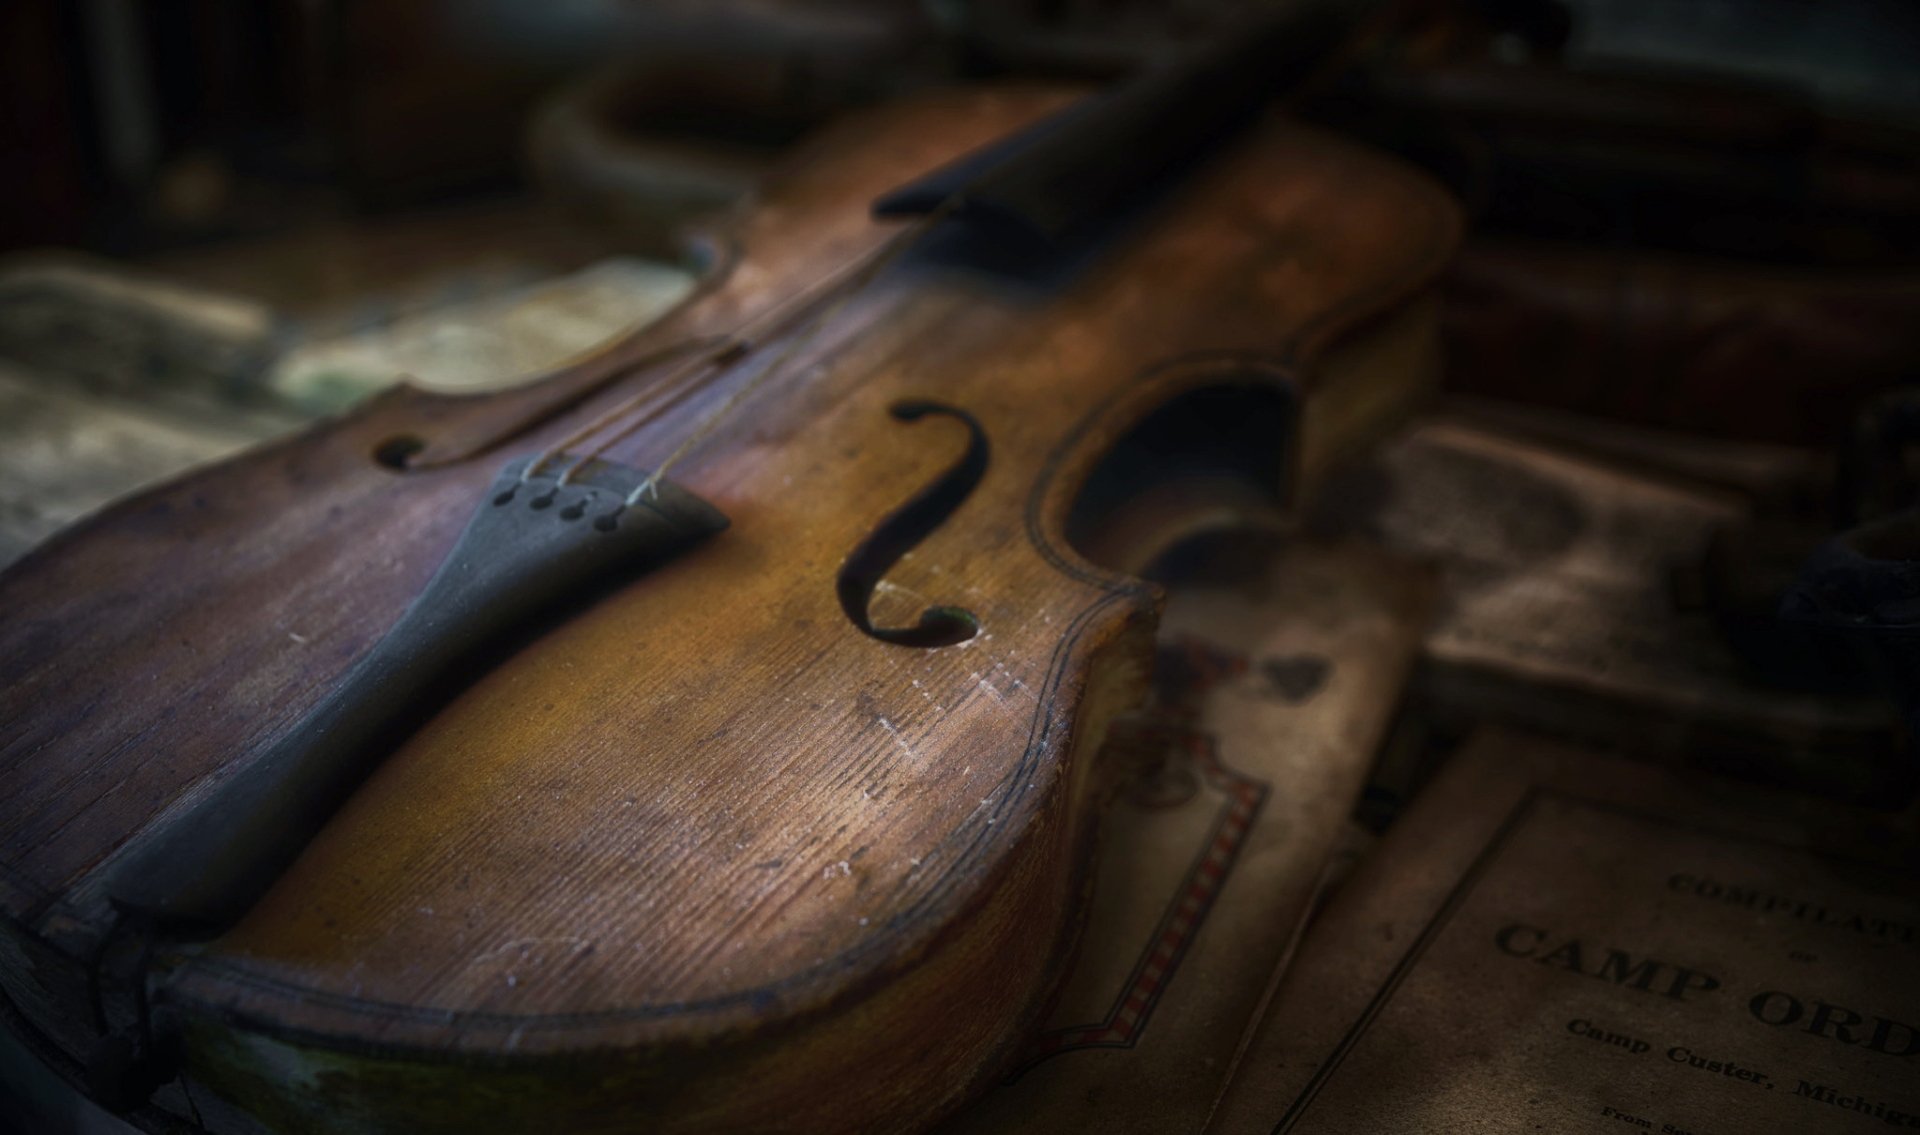 Violin HD Wallpaper